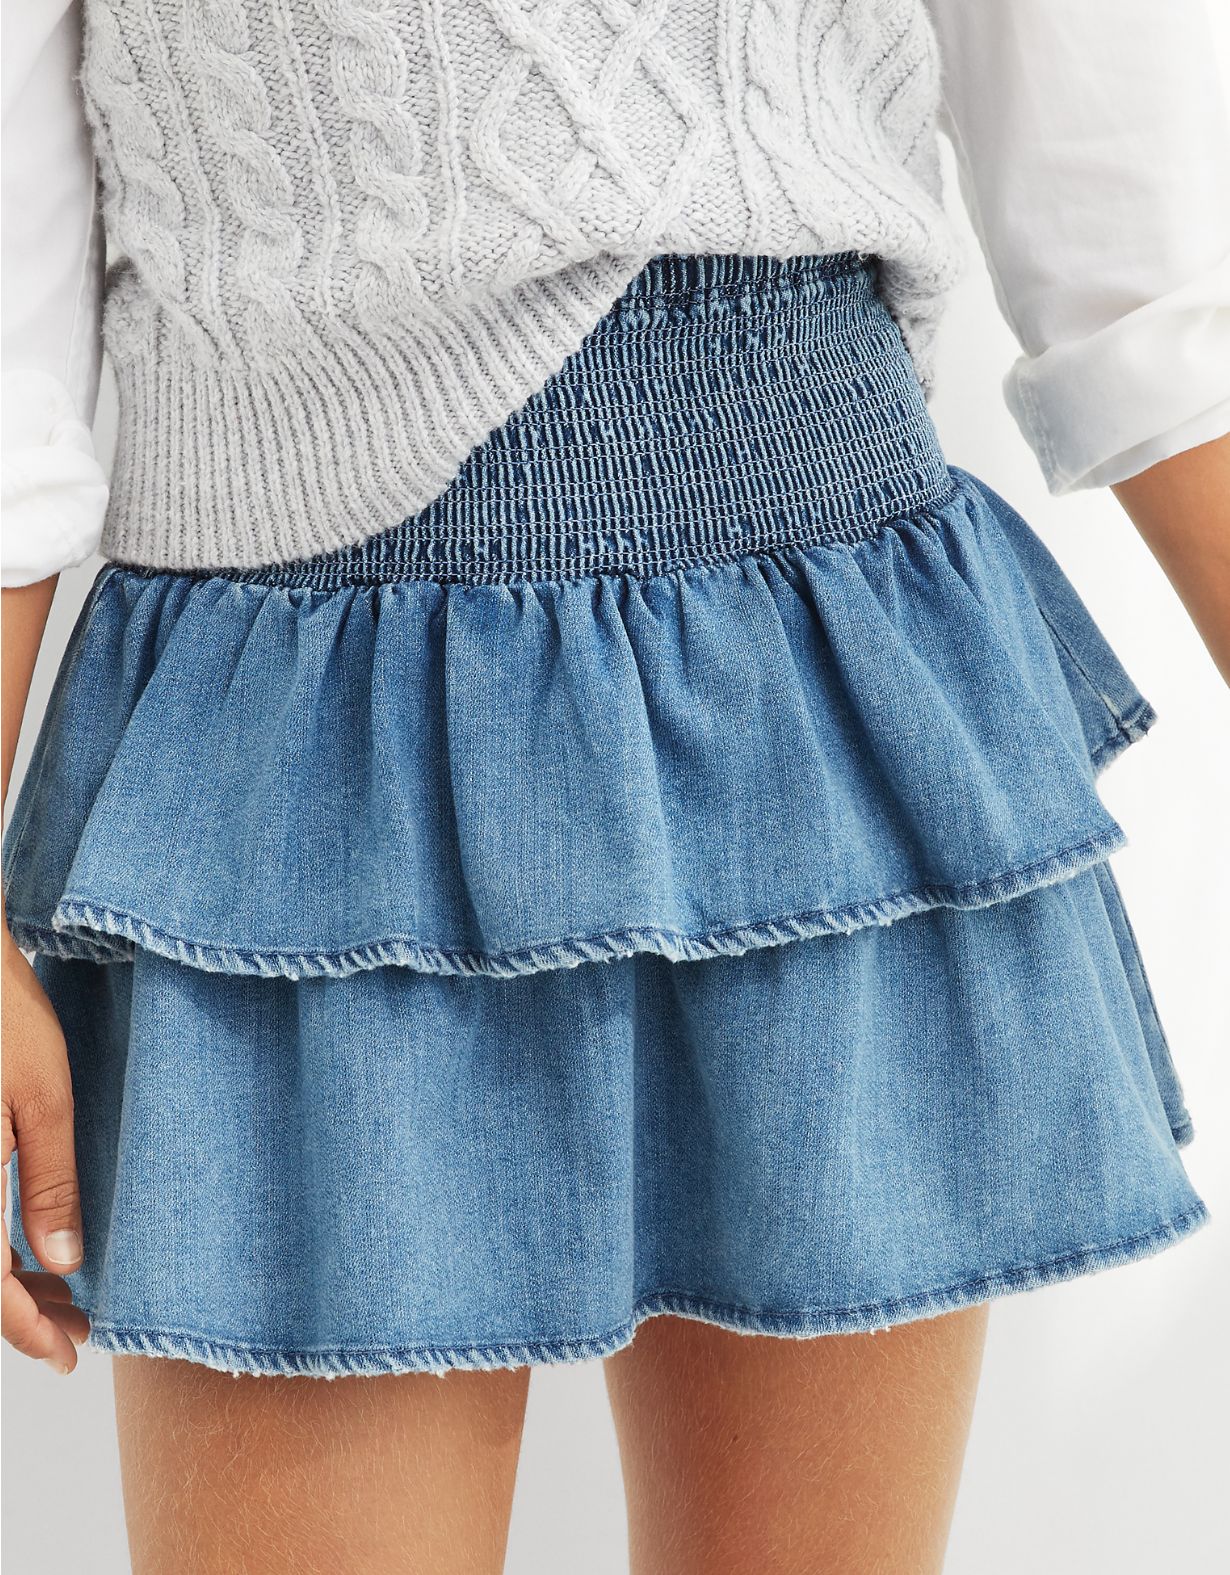 Aerie Frills 'N' Thrills Denim Mini Skirt